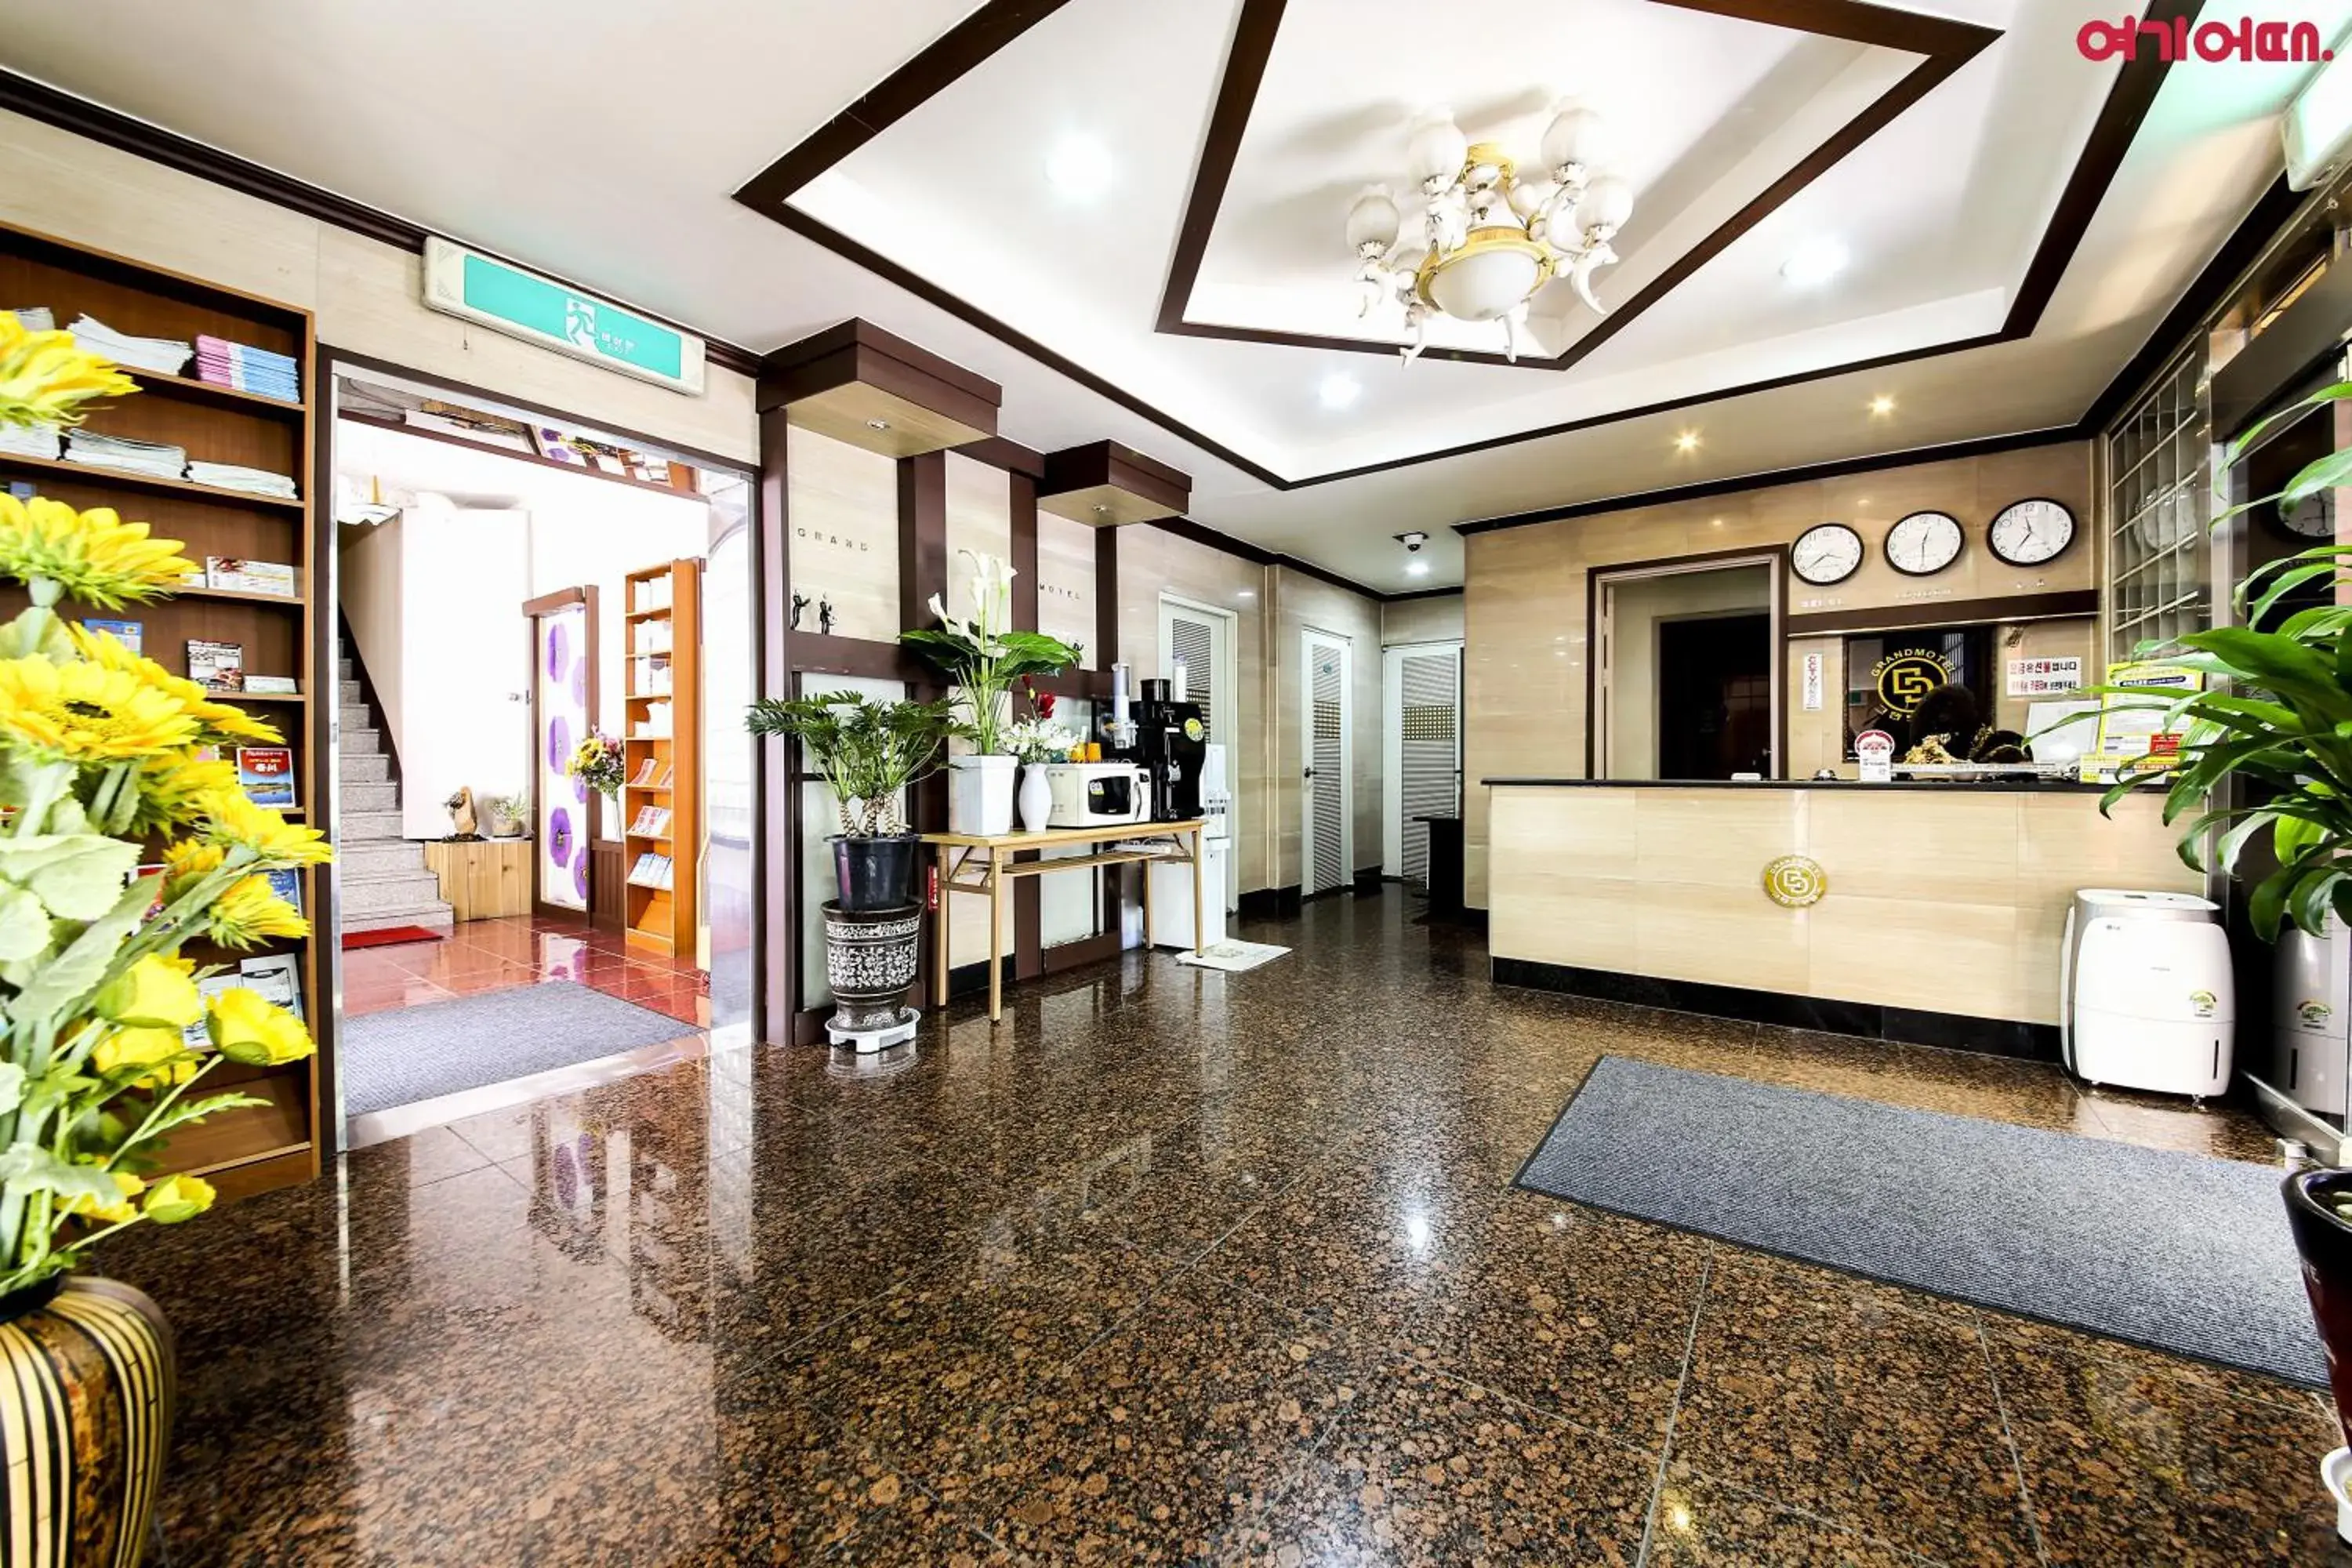 Lobby or reception in Goodstay Grand Motel Chuncheon